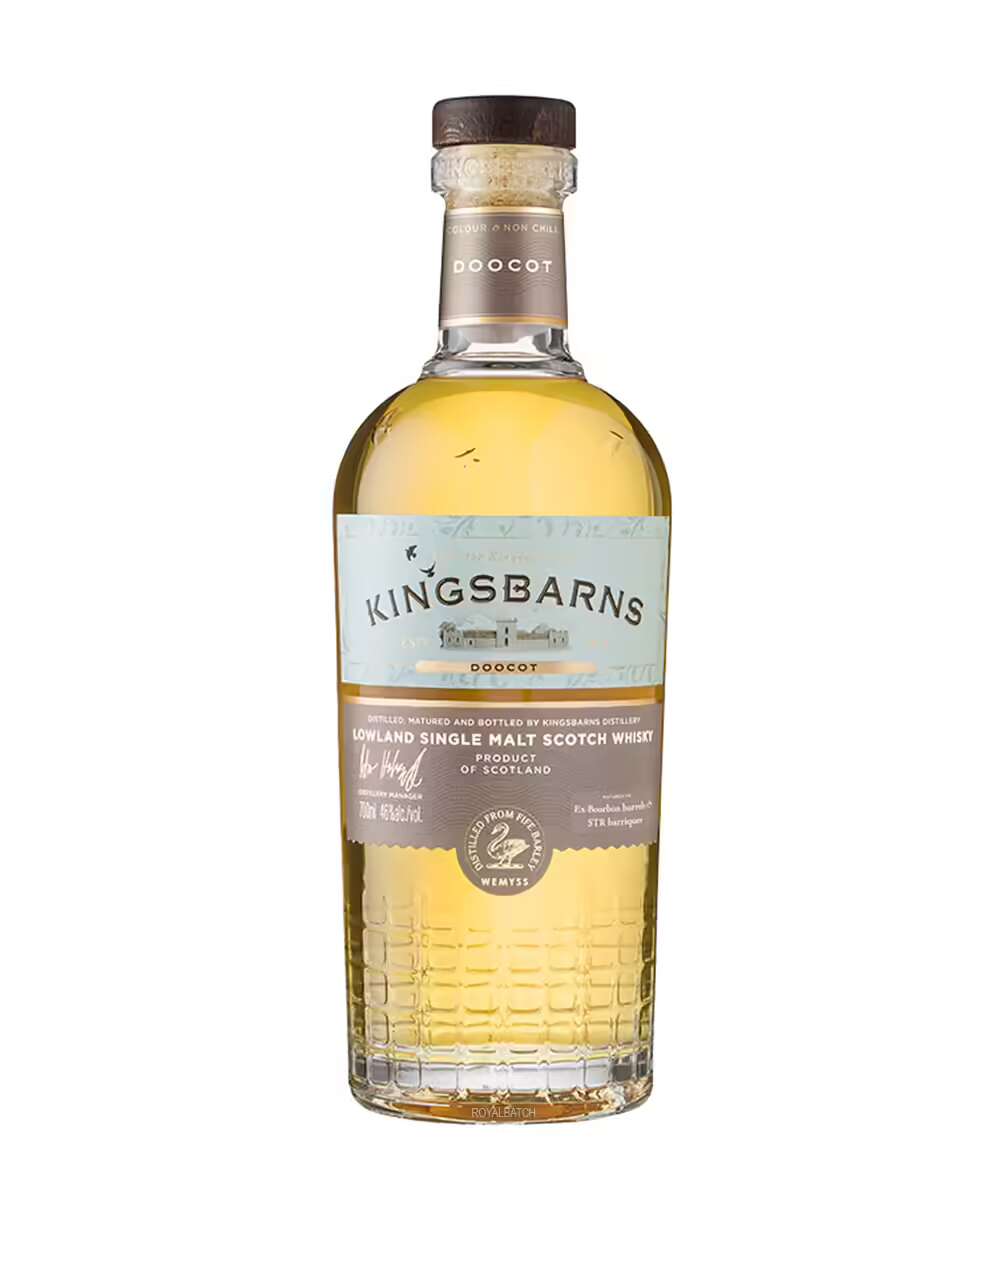 KingsBarns Doocot Lowland Single Malt Scotch Whisky